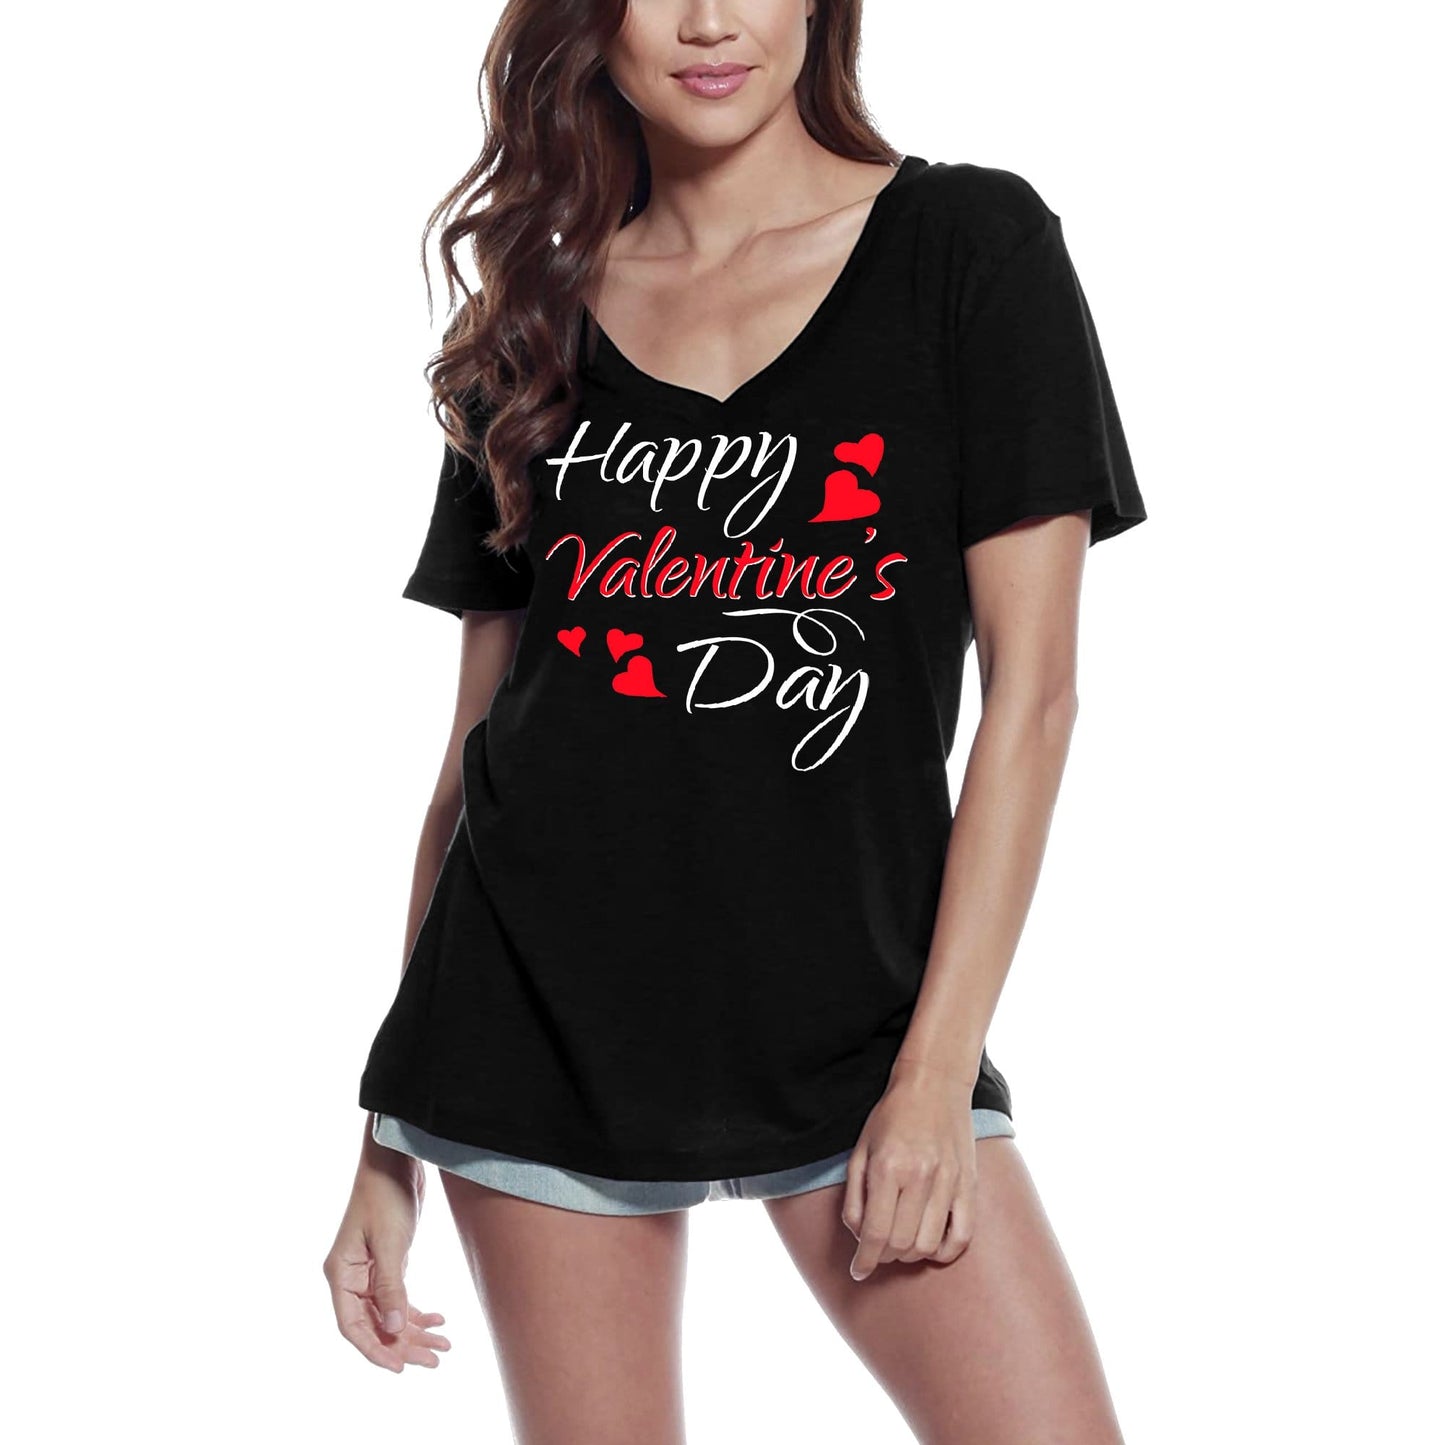 ULTRABASIC Women's T-Shirt Happy Valentine's Day - Love Valentines Short Sleeve Graphic Tees Tops